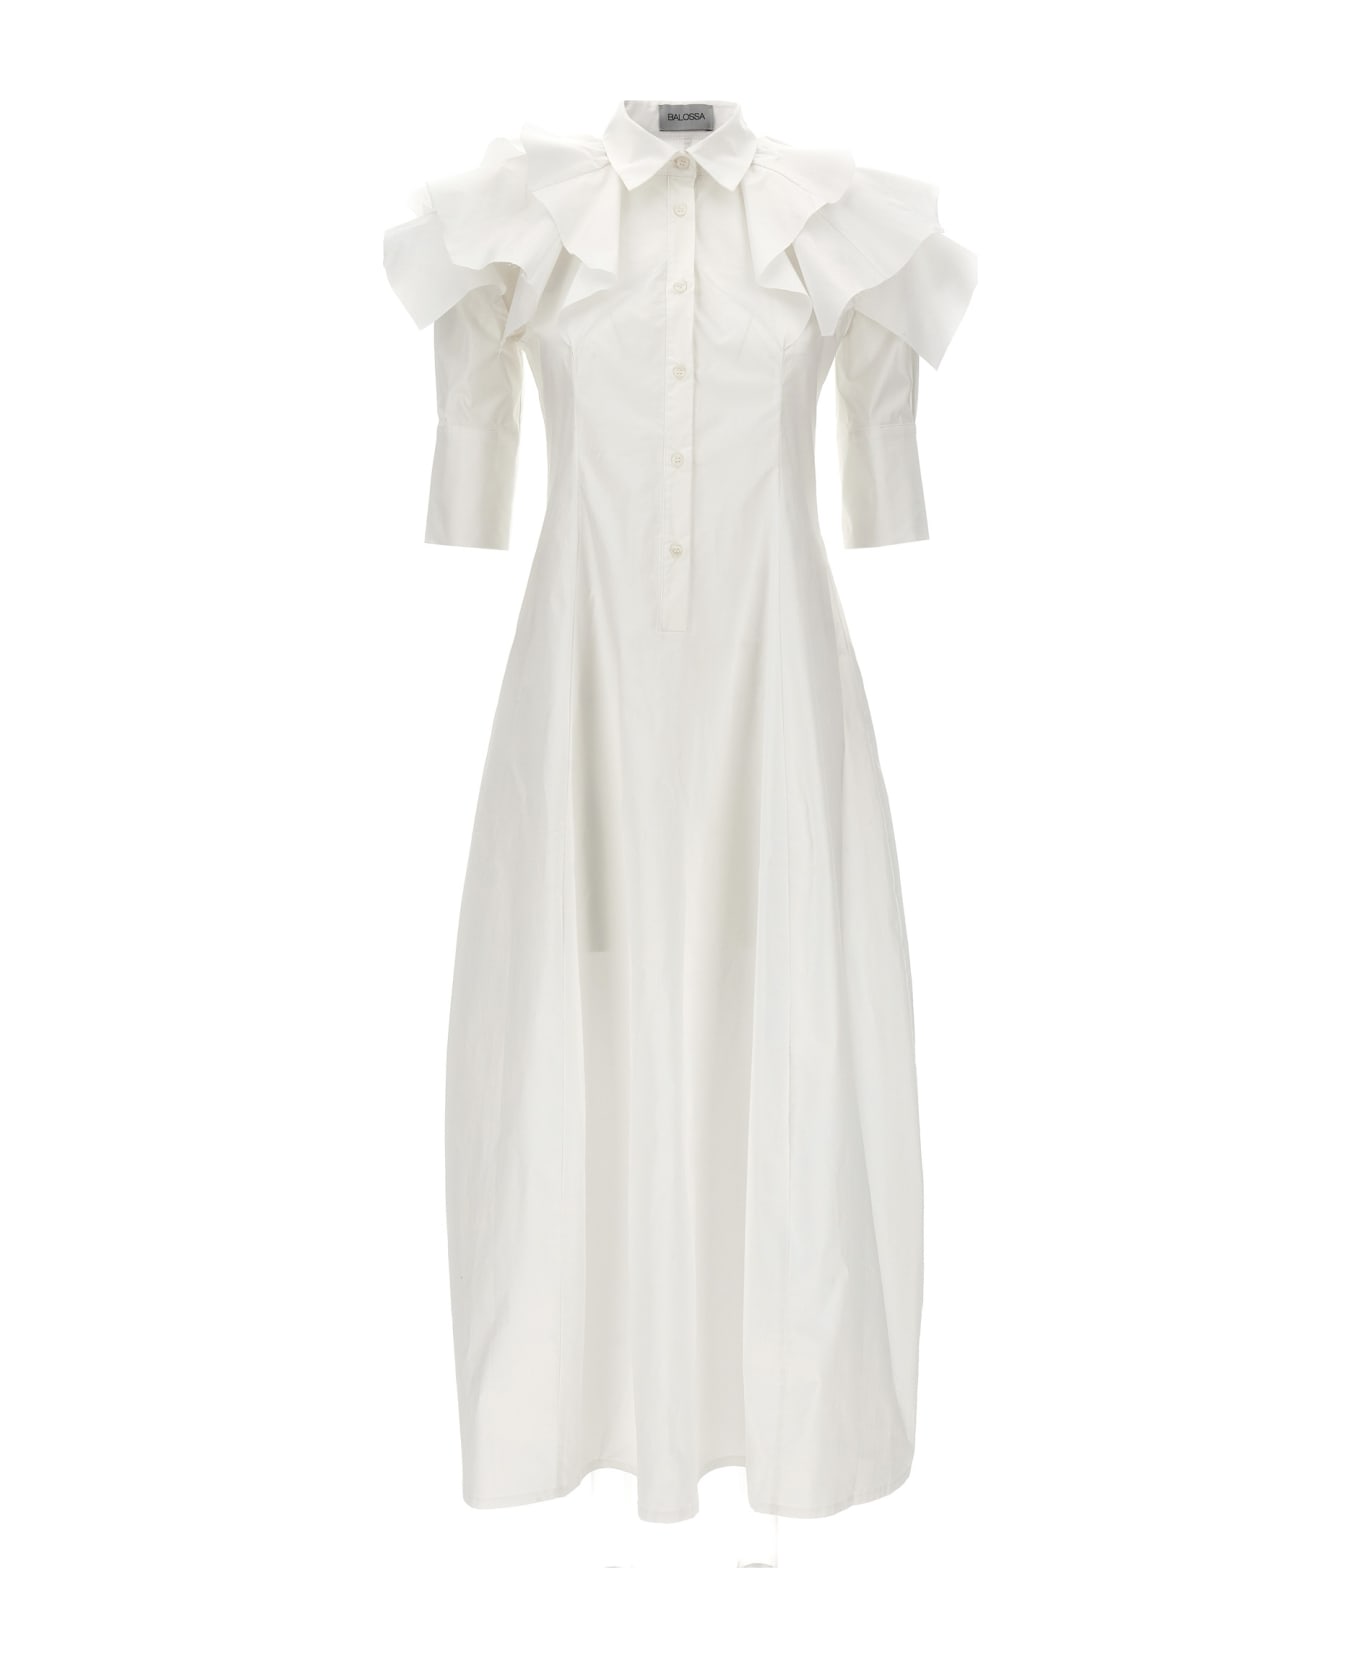 Balossa 'miami' Shirt Dress - White ワンピース＆ドレス